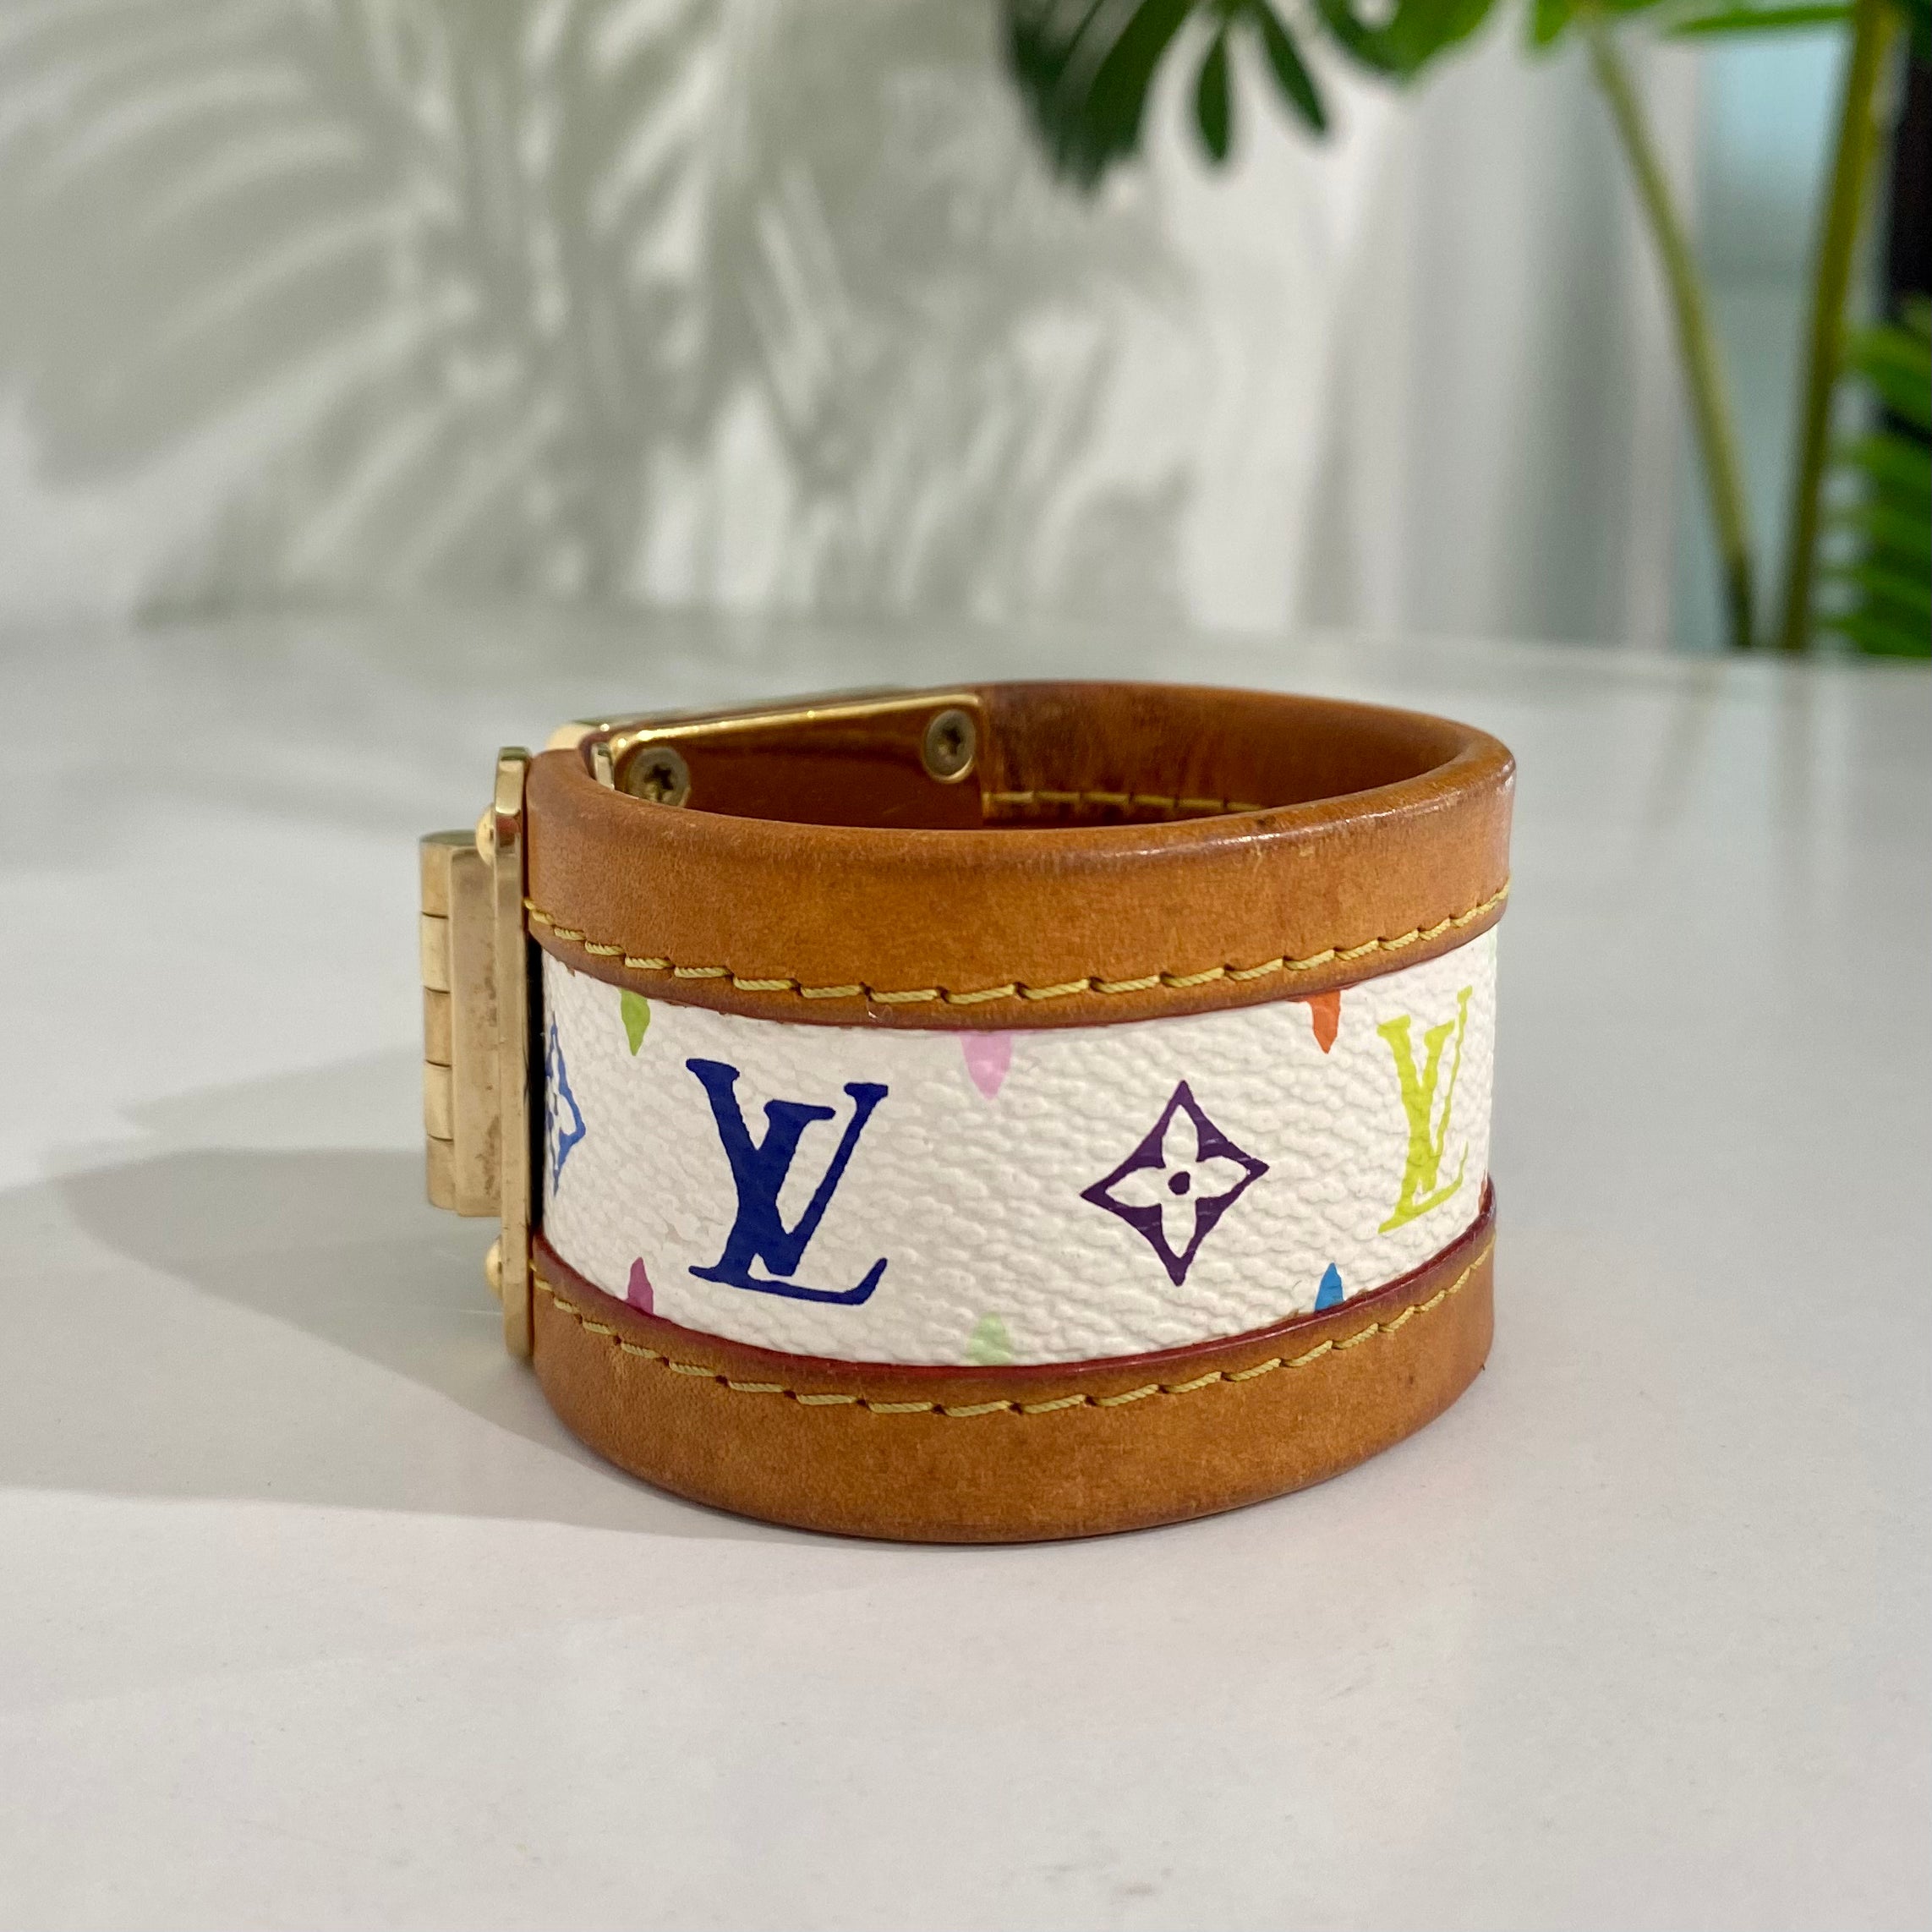 🇲🇾Louis Vuitton Logomania Bracelet